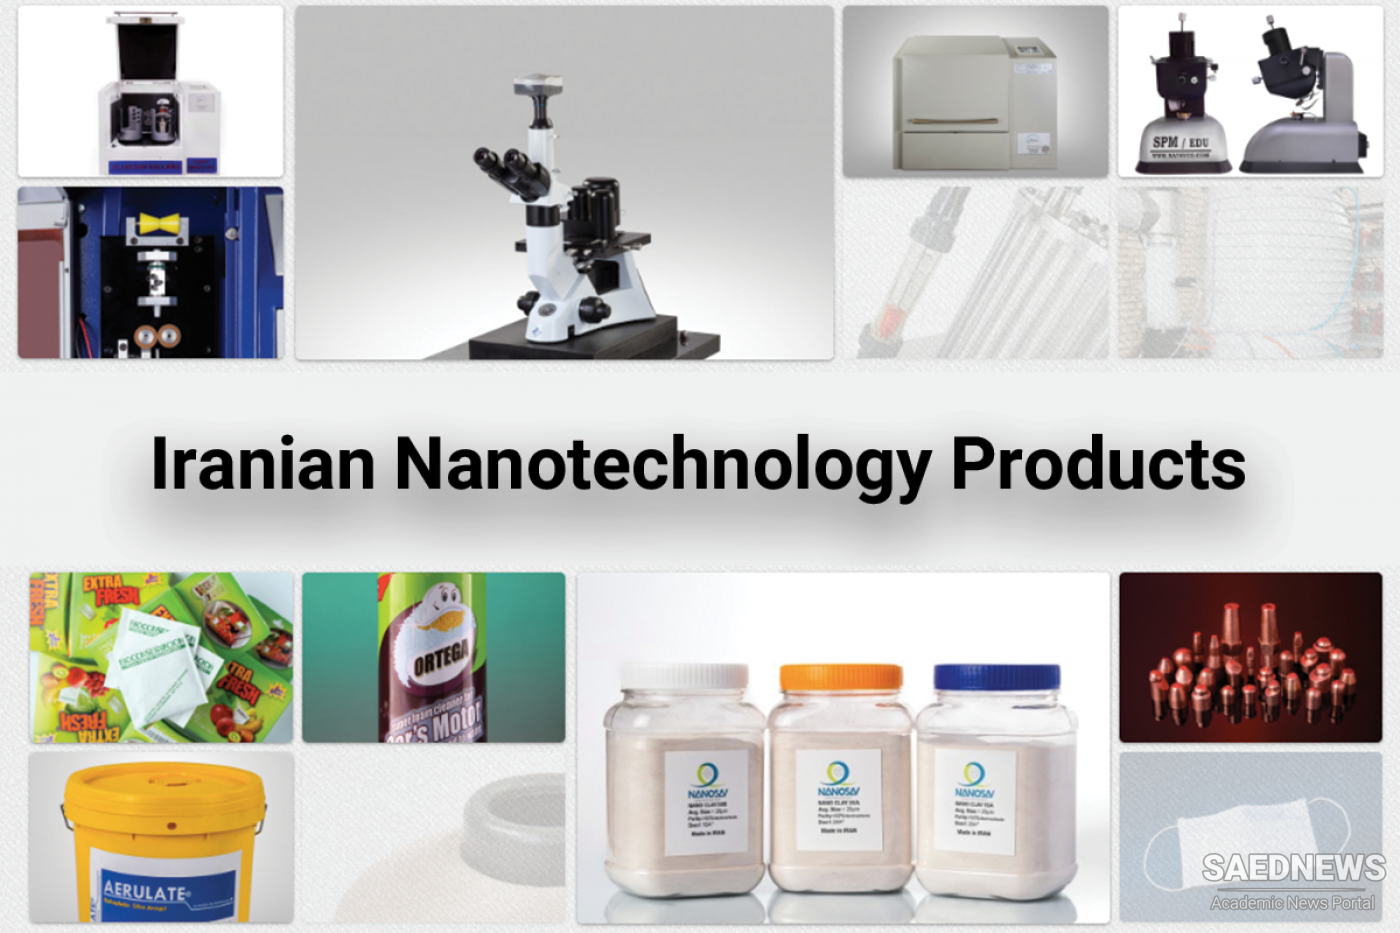 Islamic Republic of Iran a Leading Scientific and Technological Power in Nano Tech